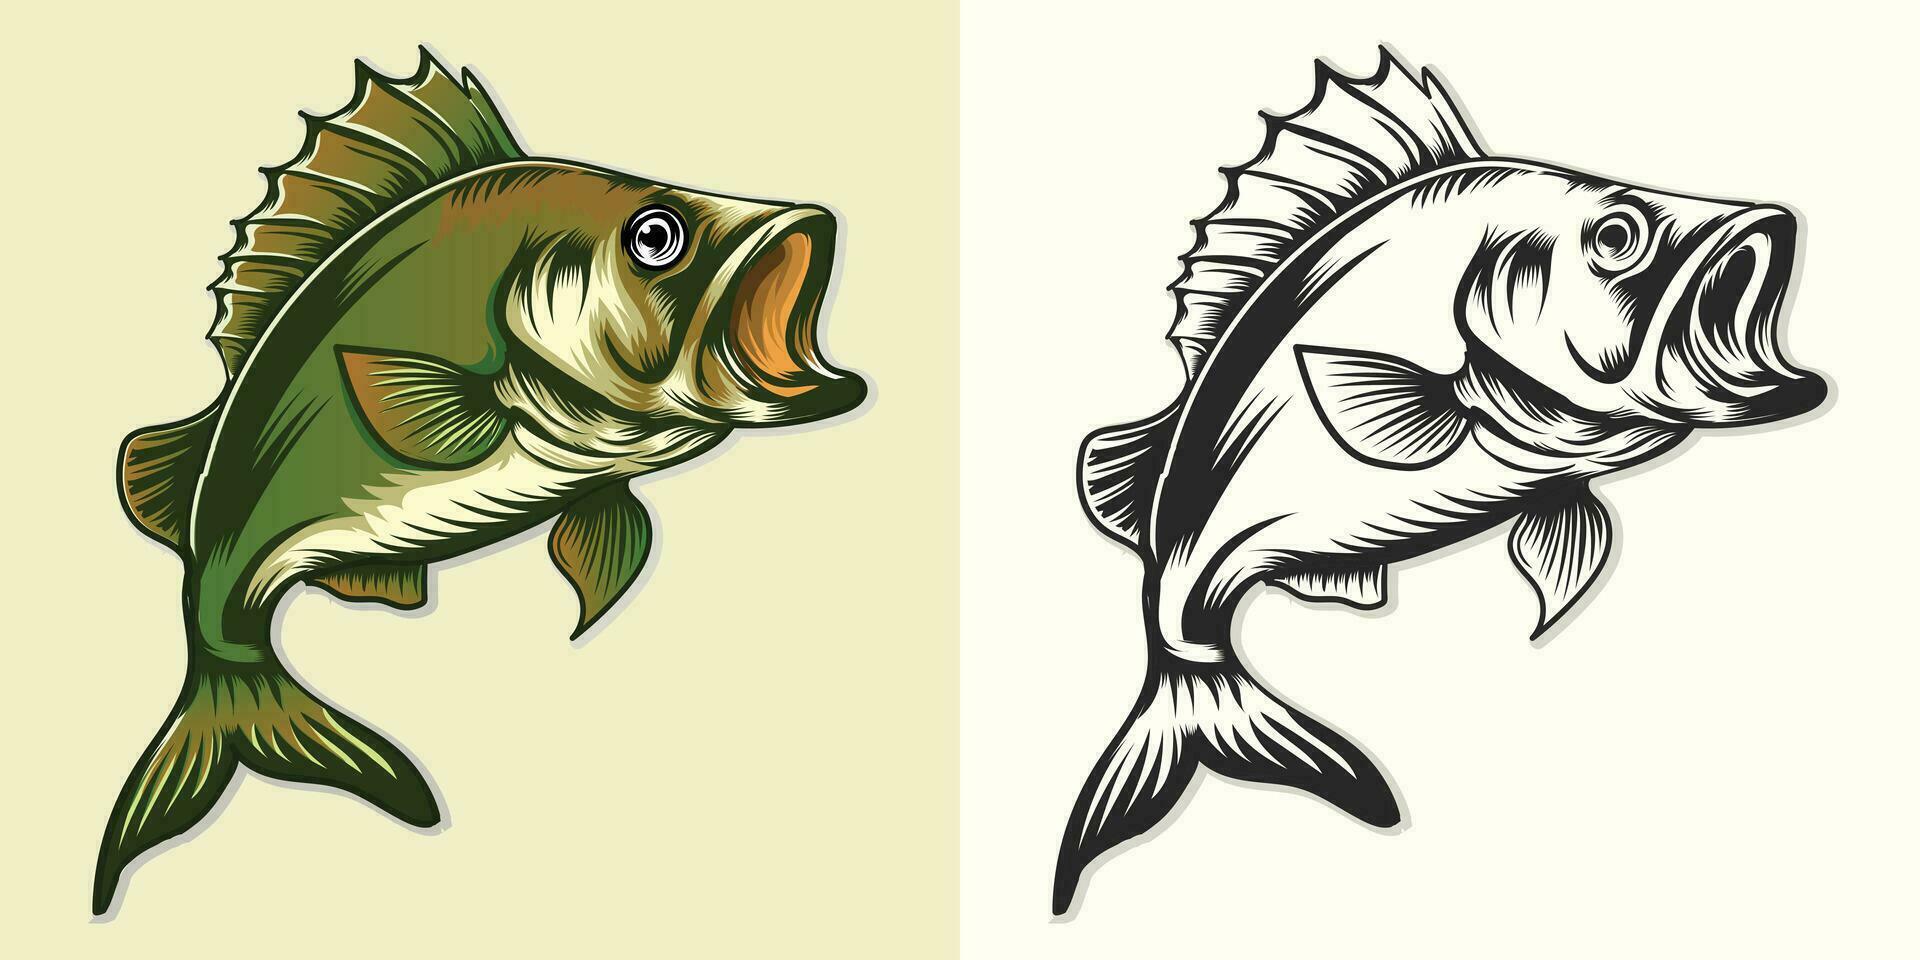 groot bas vis vector ontwerp reeks illustratie.